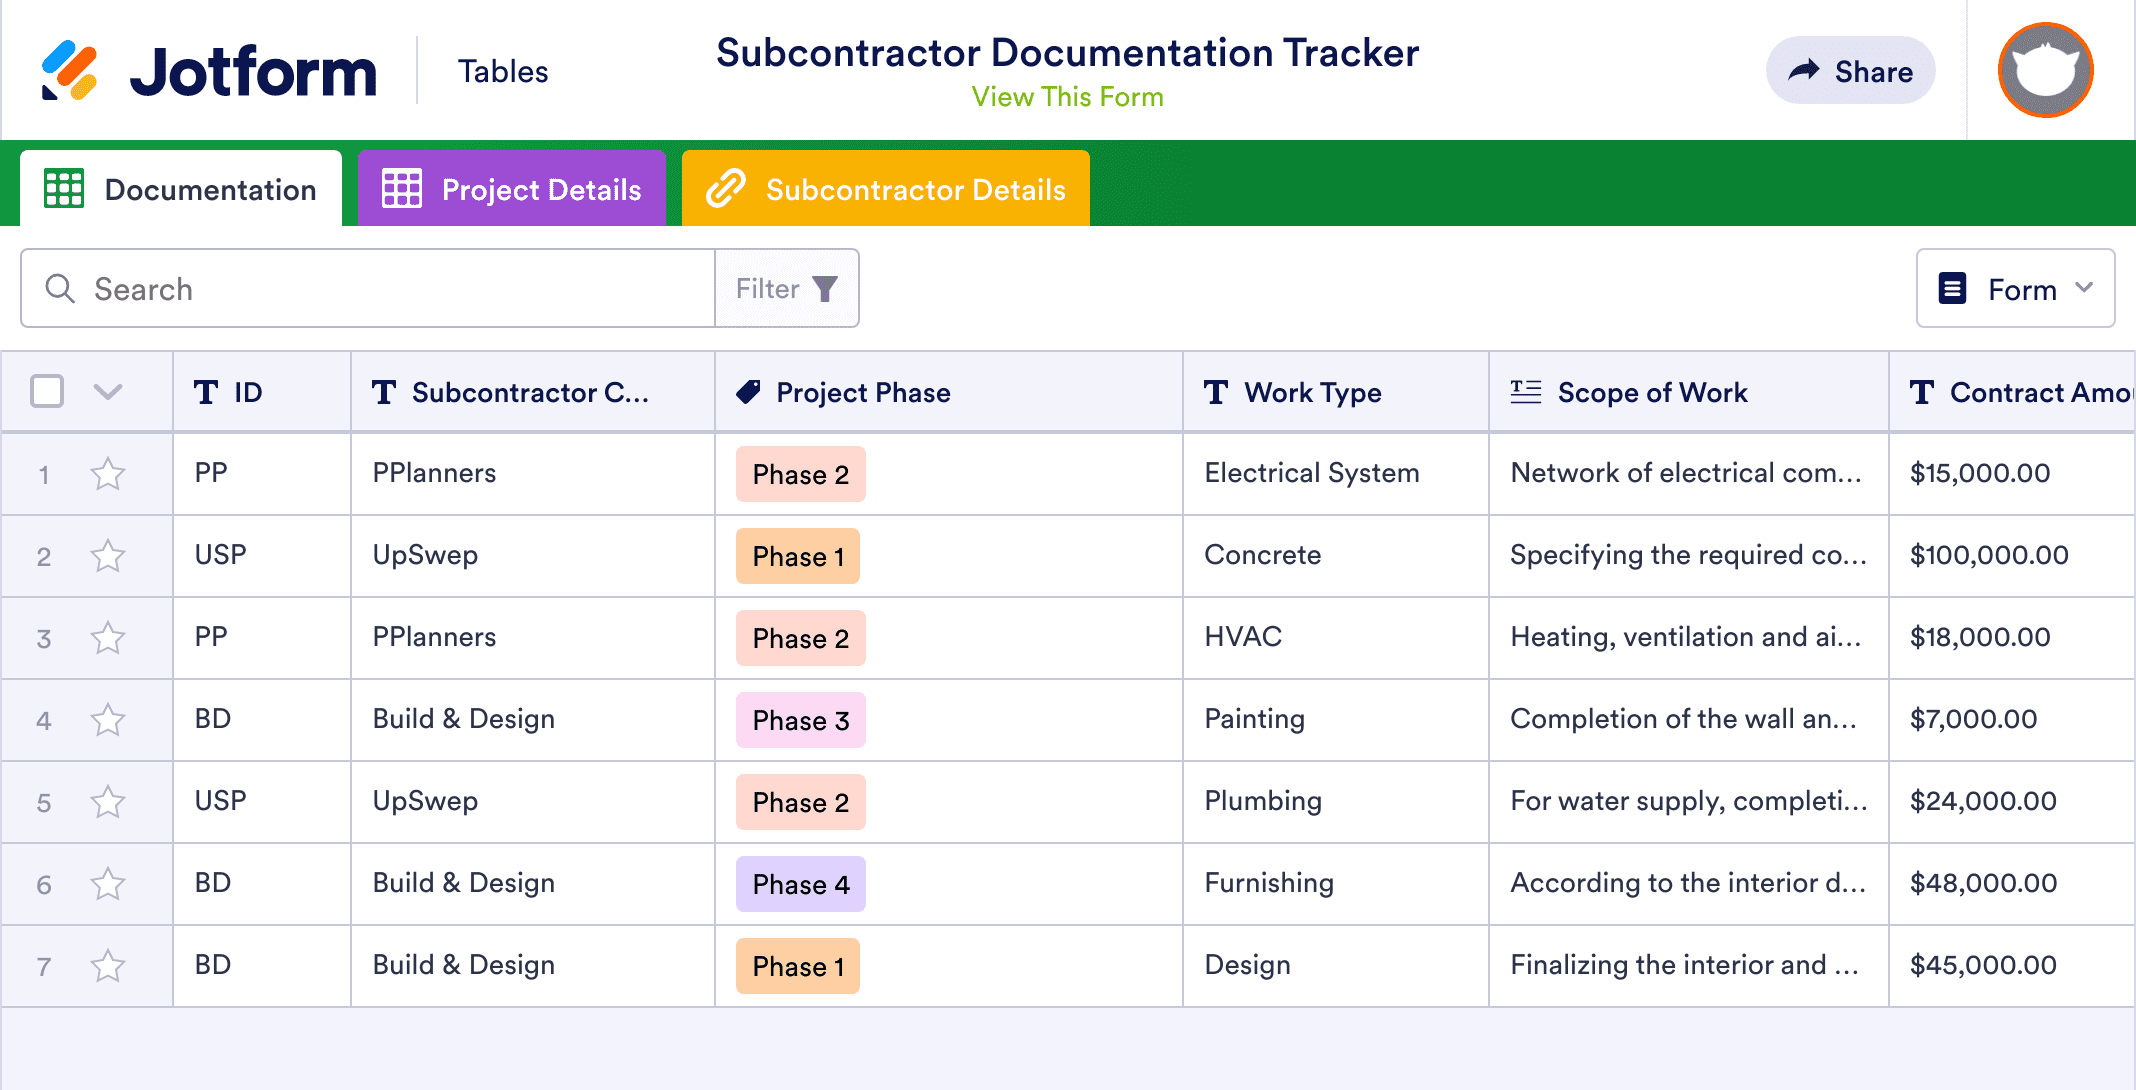 Subcontractor Documentation Tracker